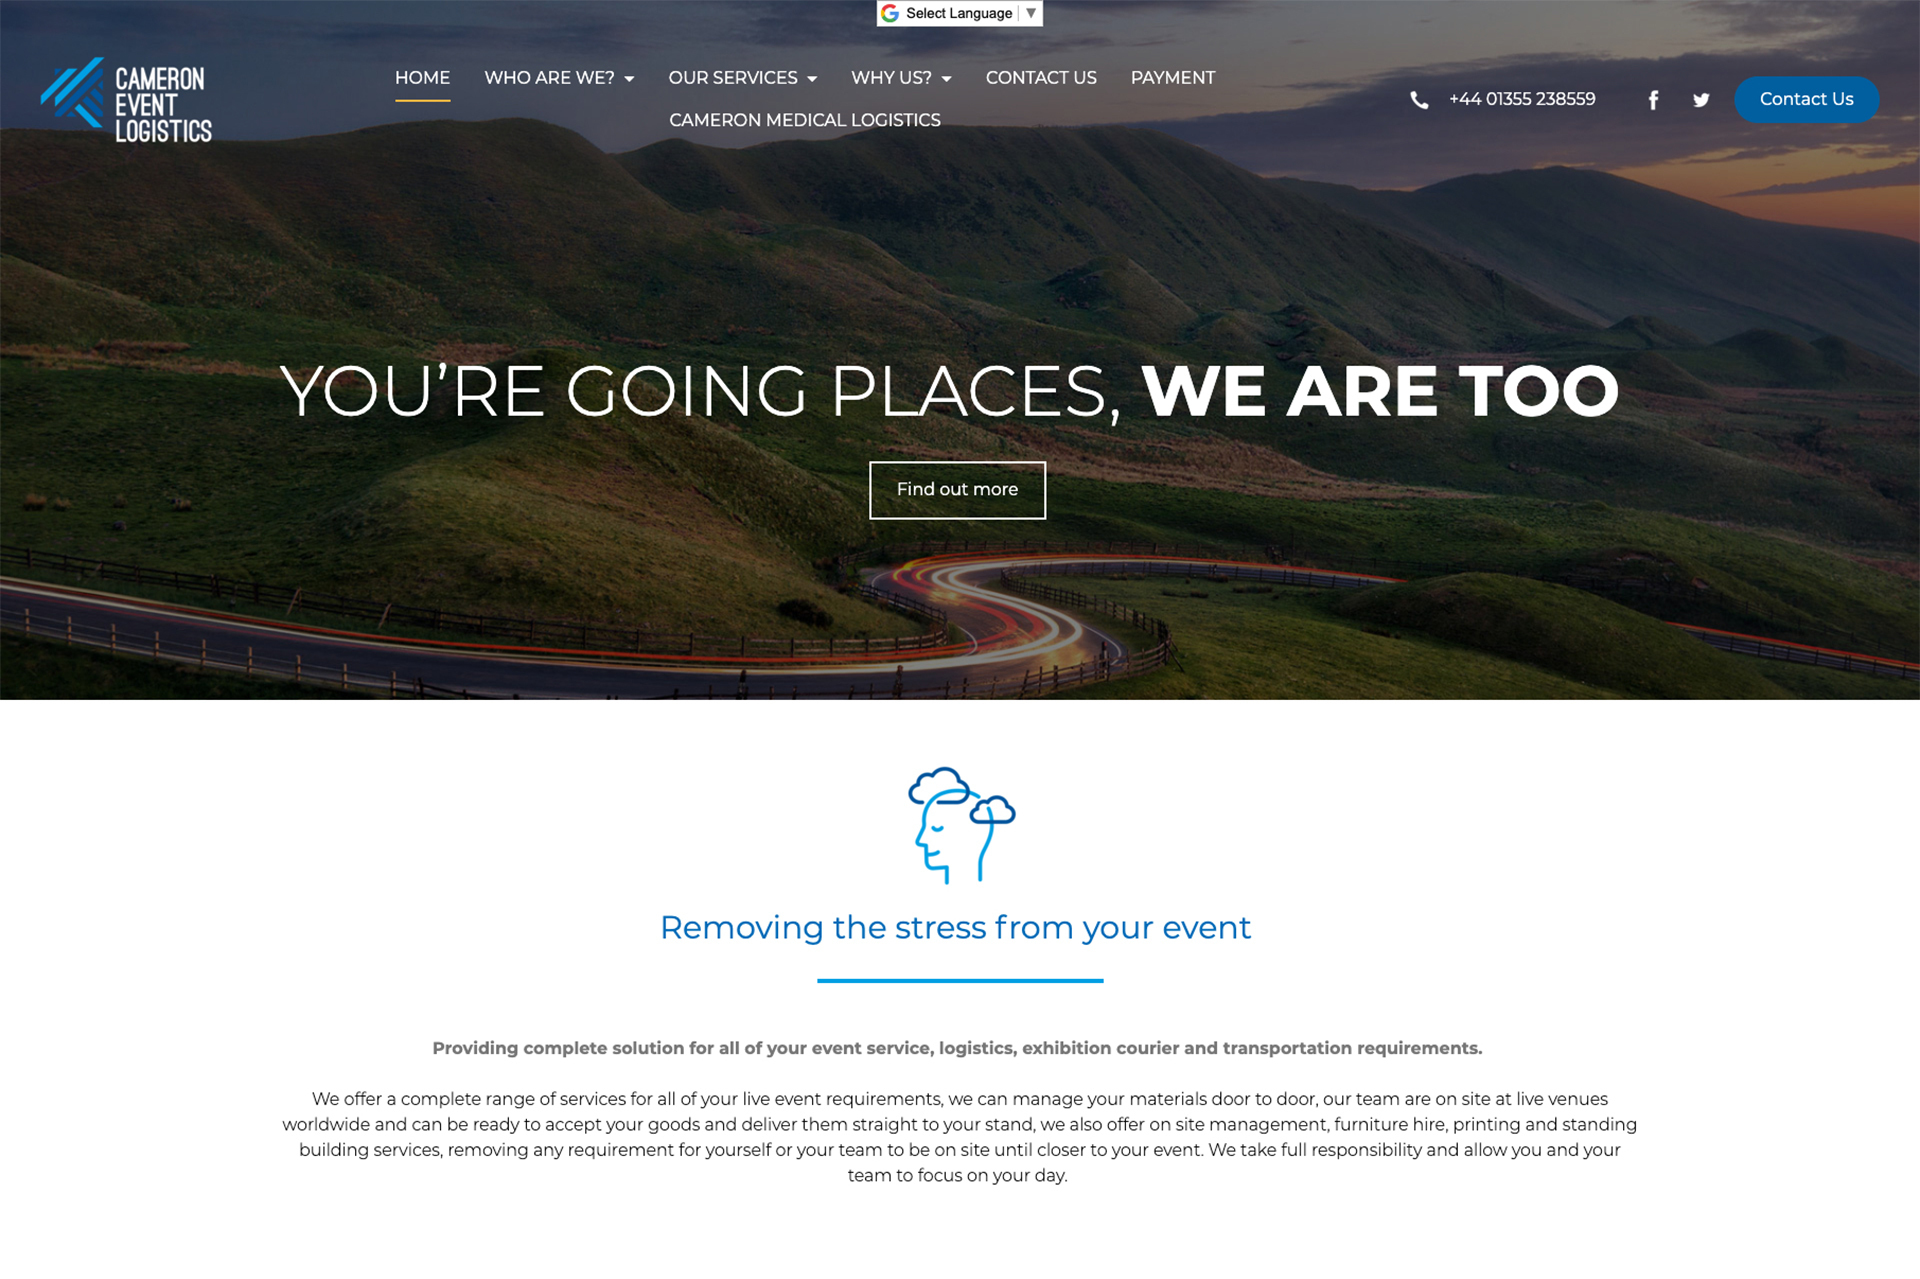 Cameron Event Logistics website - After redesign